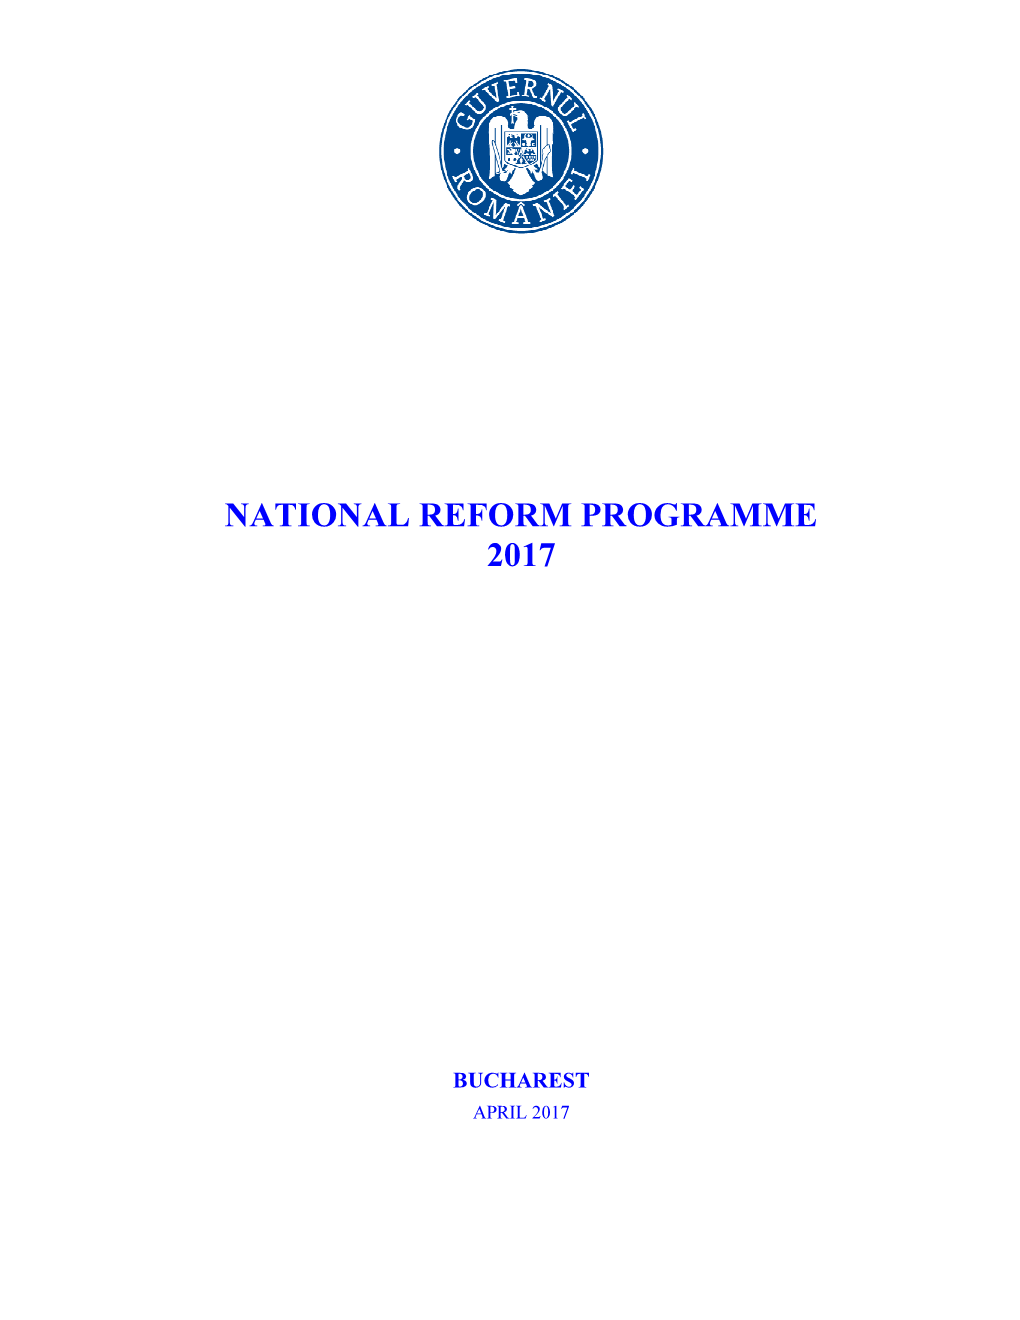 National Reform Programme 2017